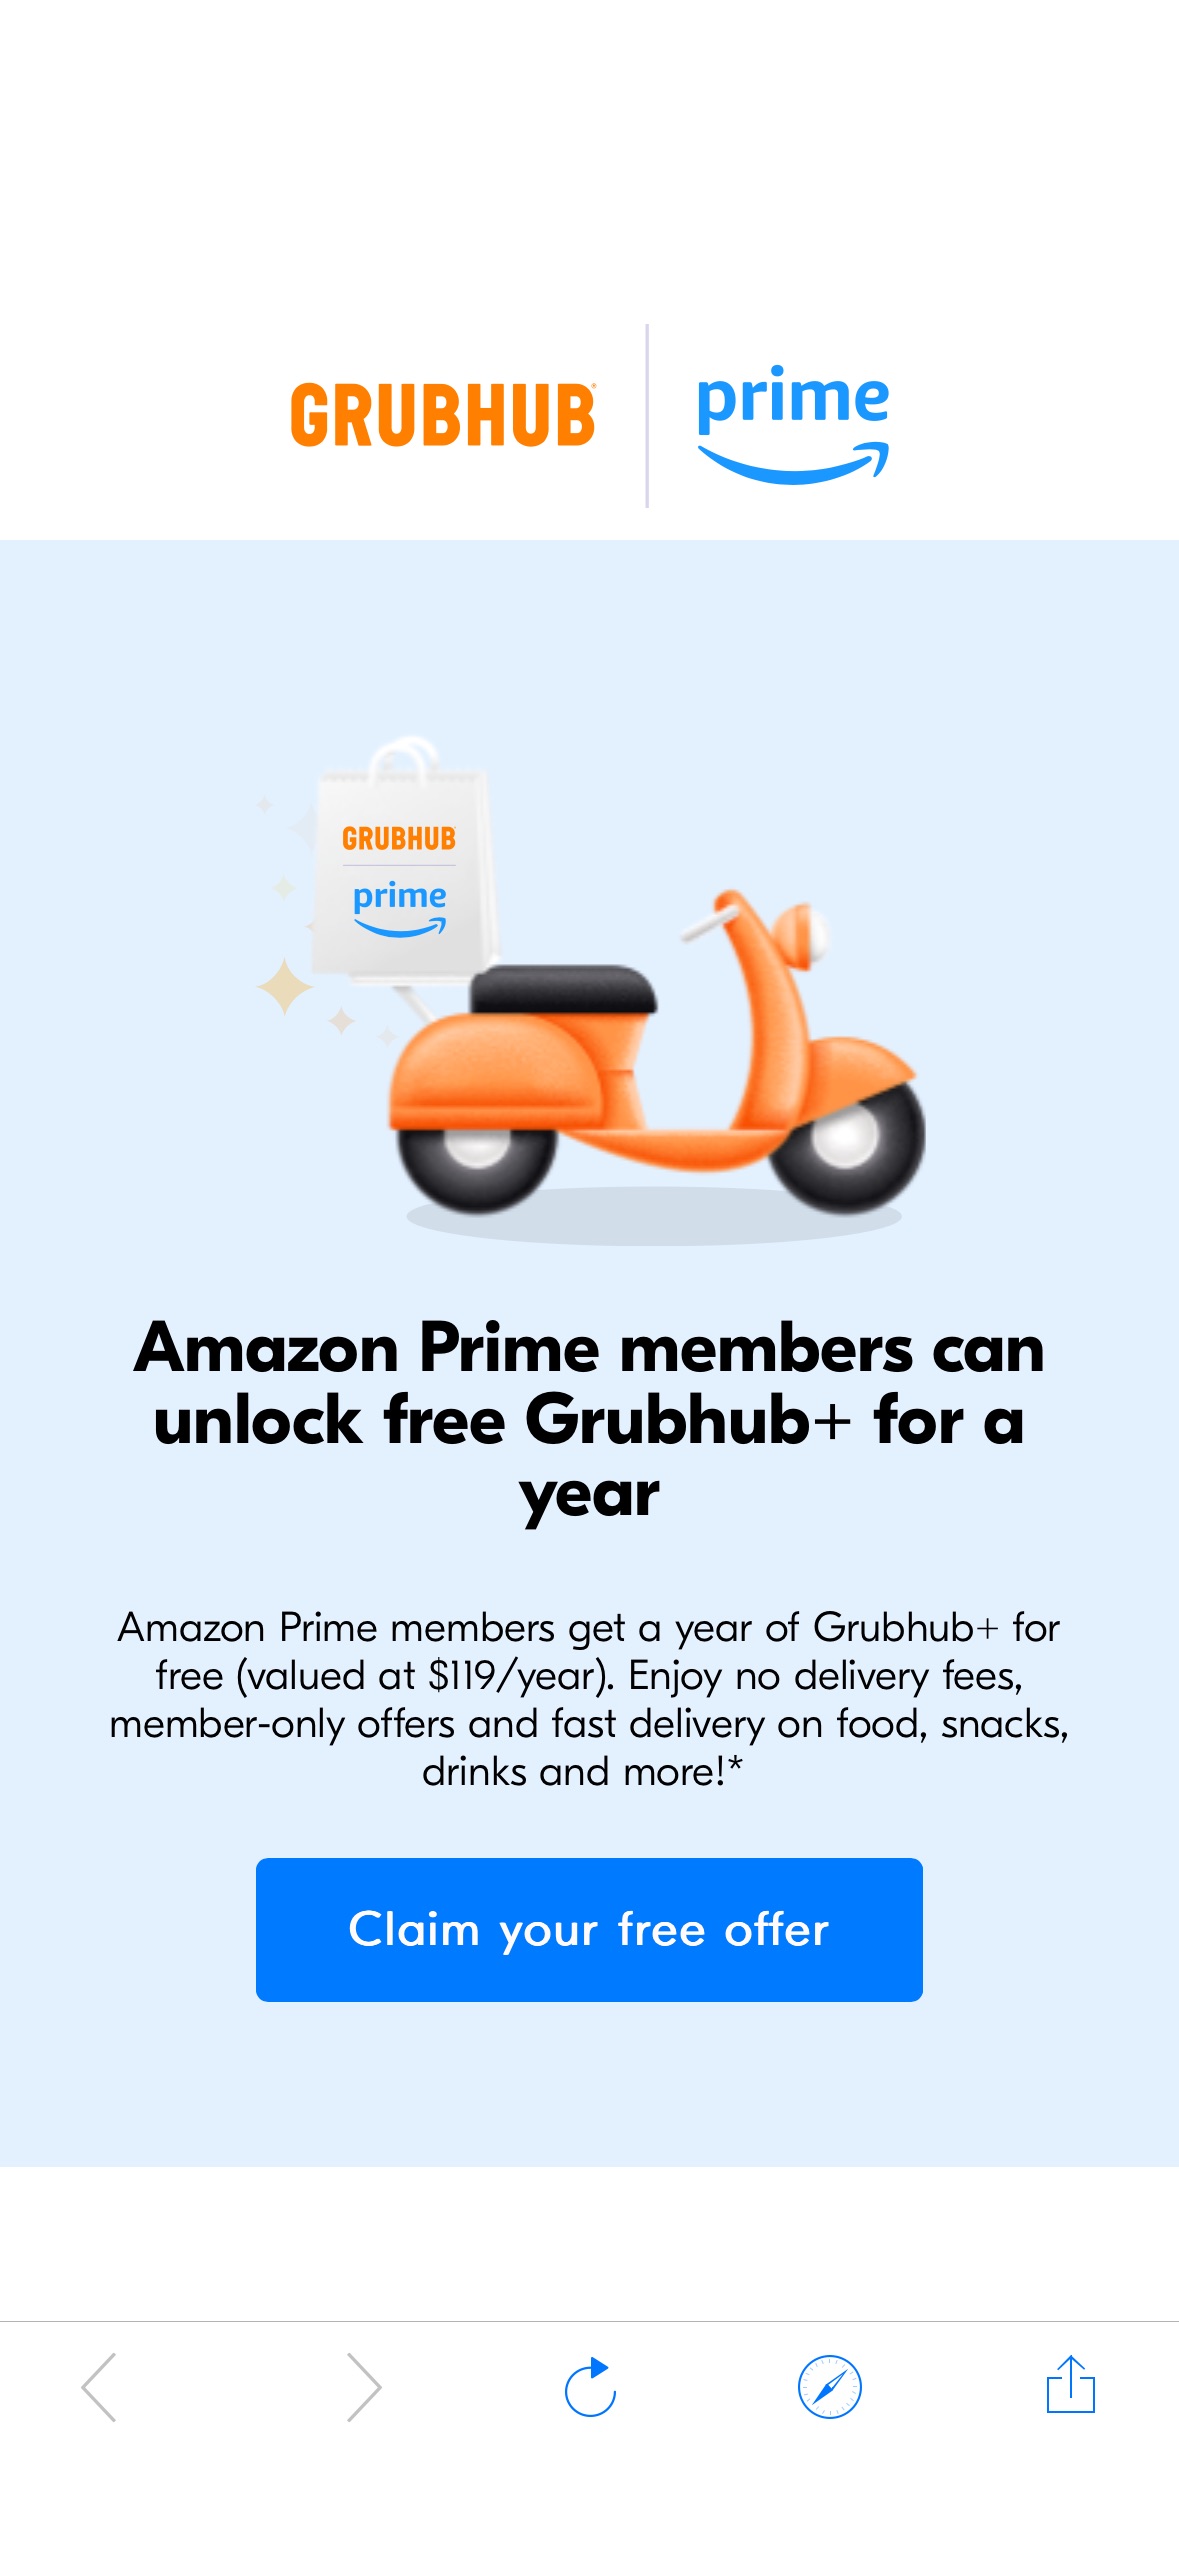 A亚马逊Prime会员可以领取一年GrubHub+会员